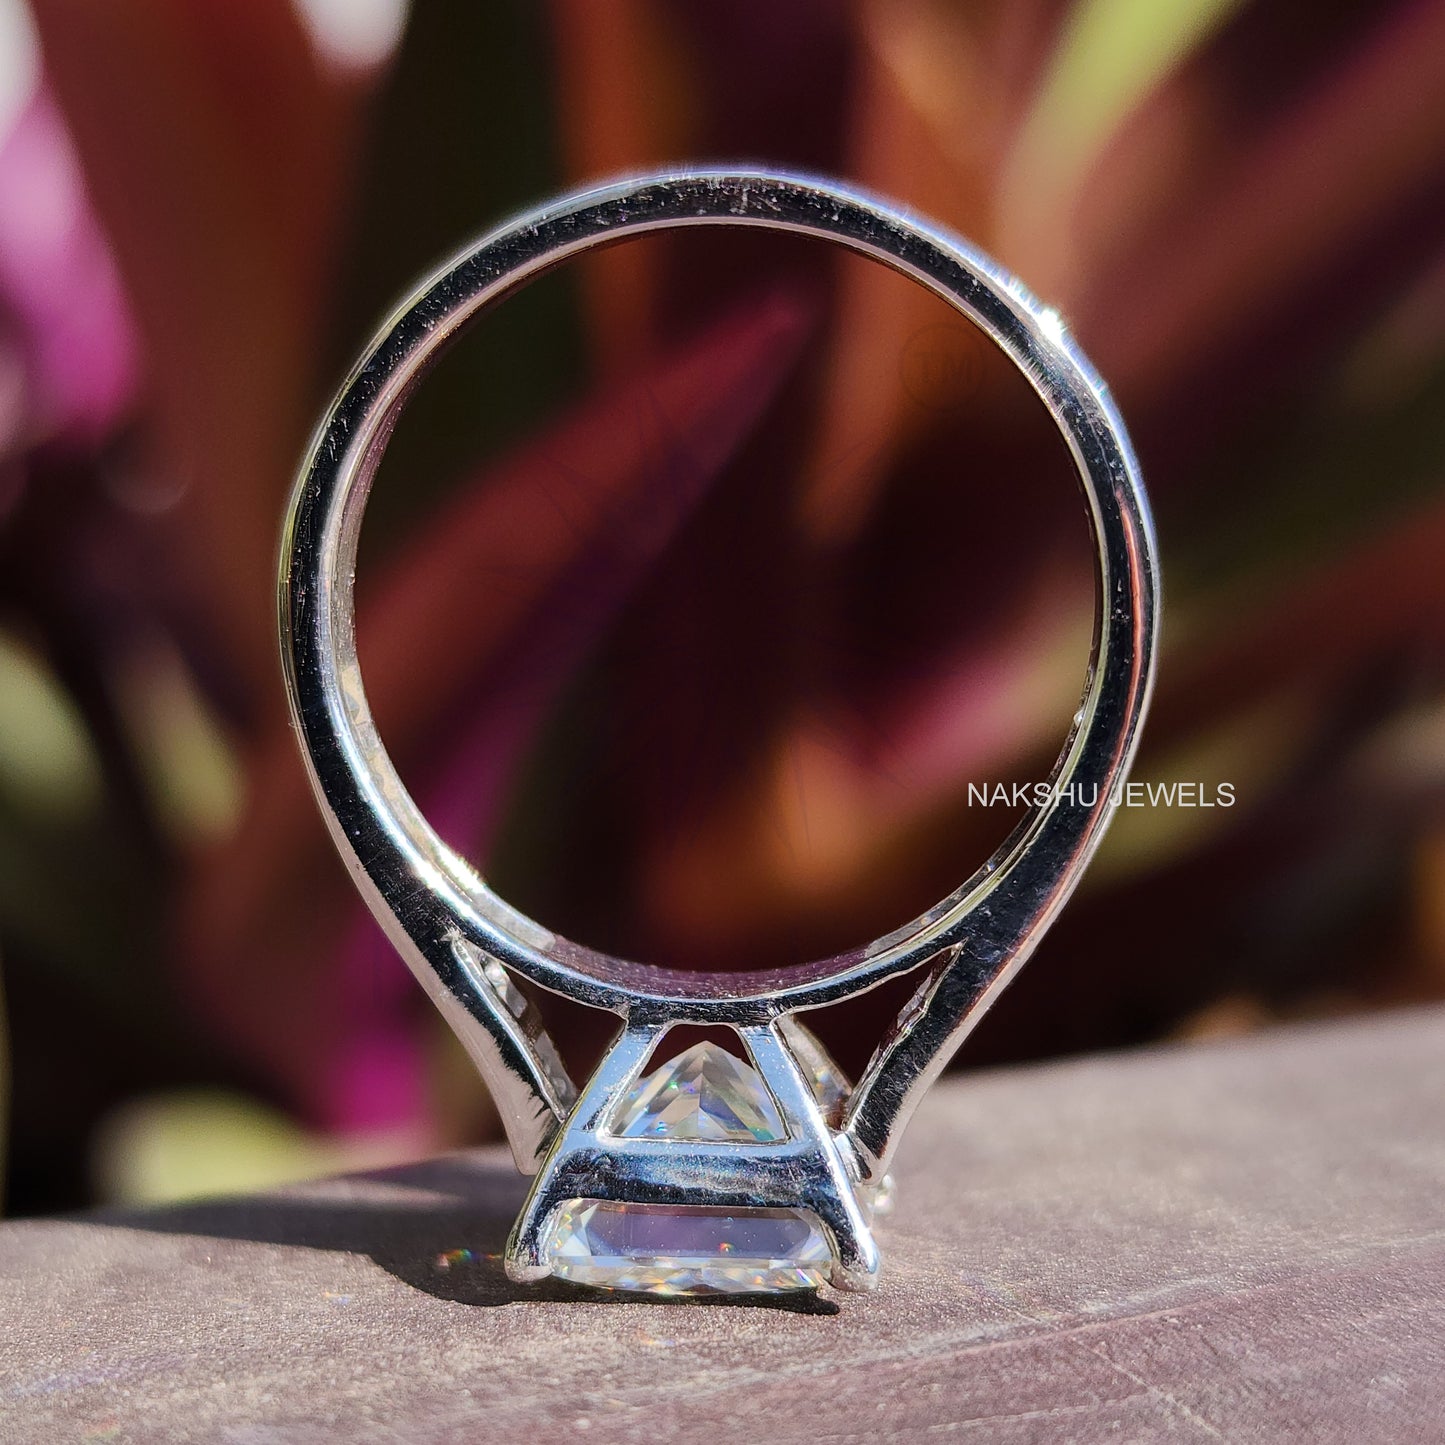 3CT Princess Cut Amazing Channel Set Moissanite Engagement Ring